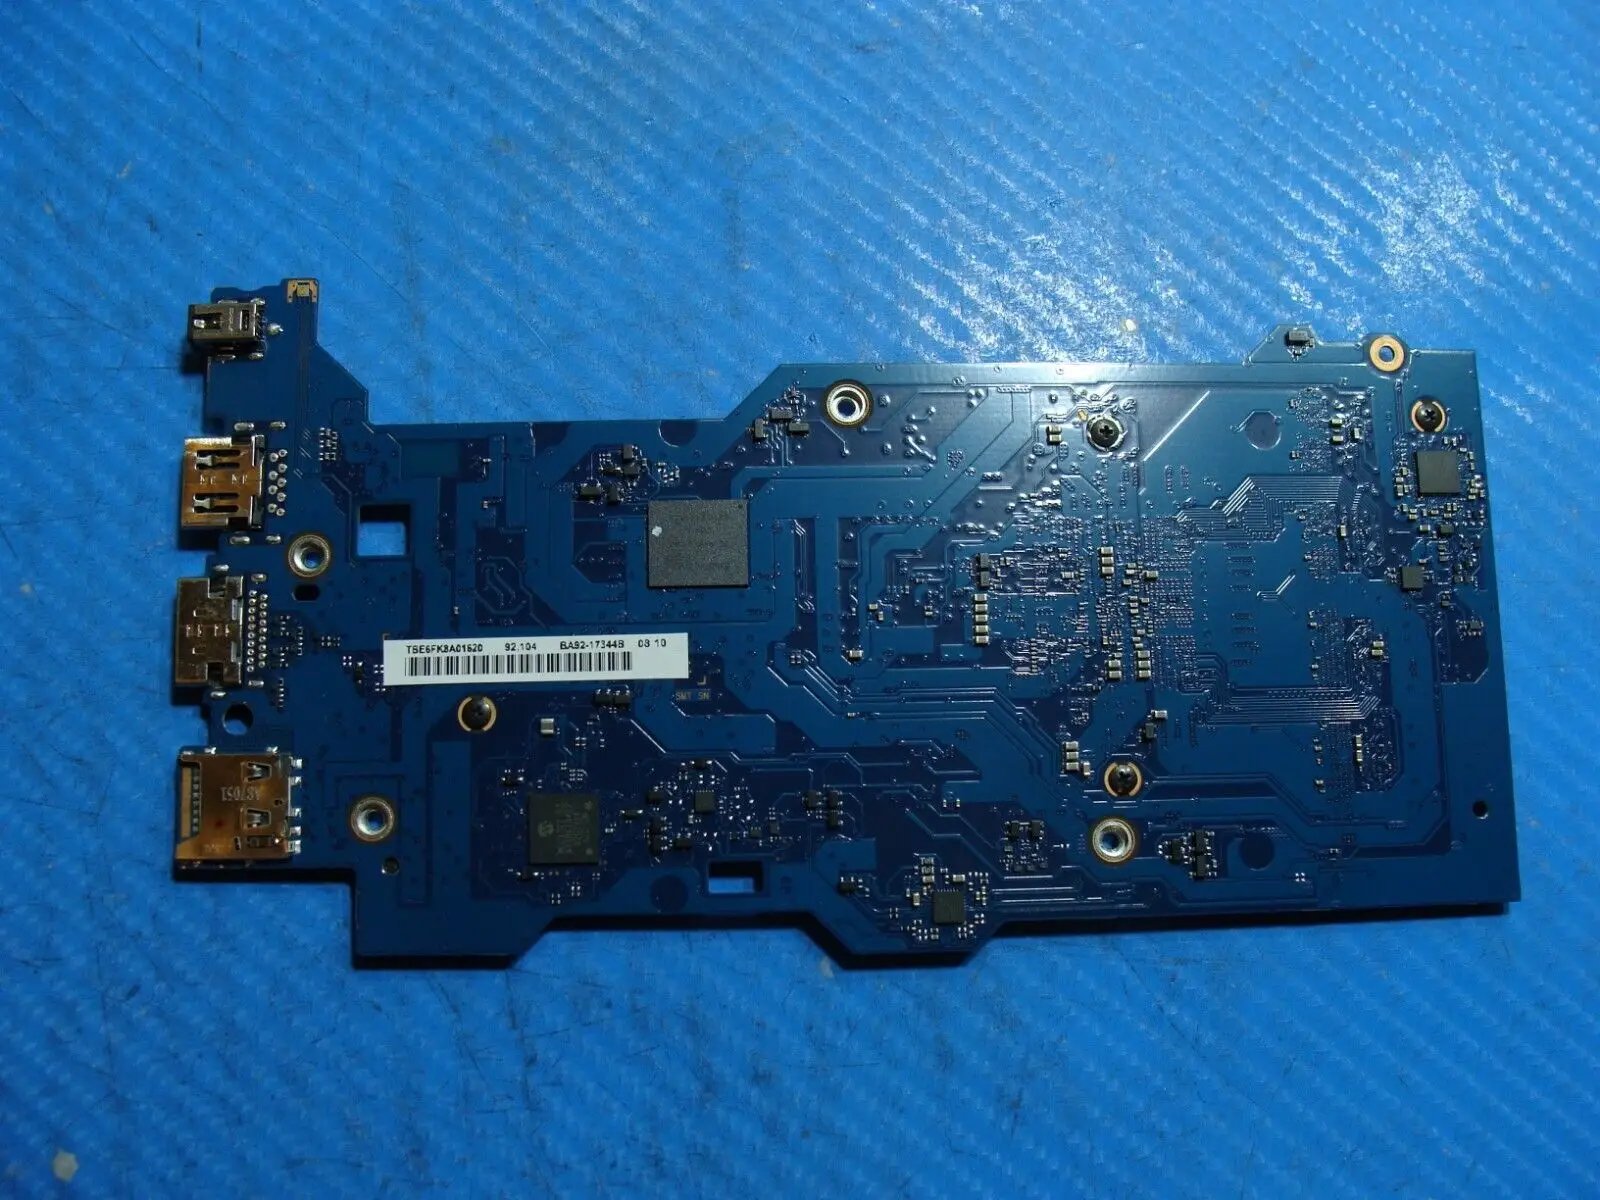 Samsung XE500C13-S02US 11.6